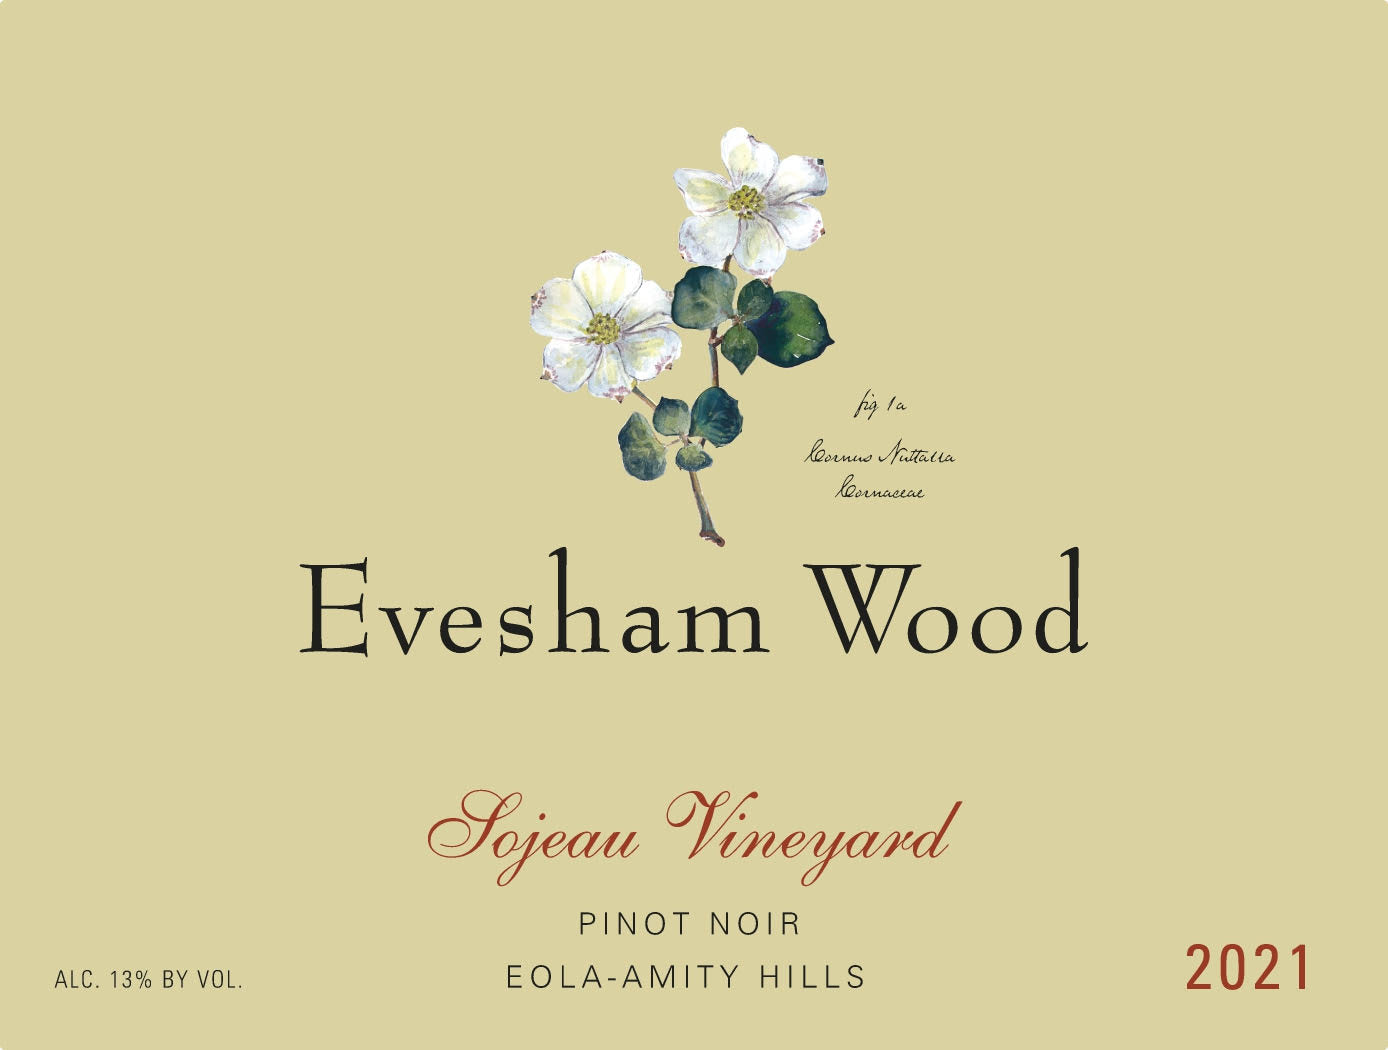 Evesham Wood Sojeau Vineyard Pinot Noir 2021